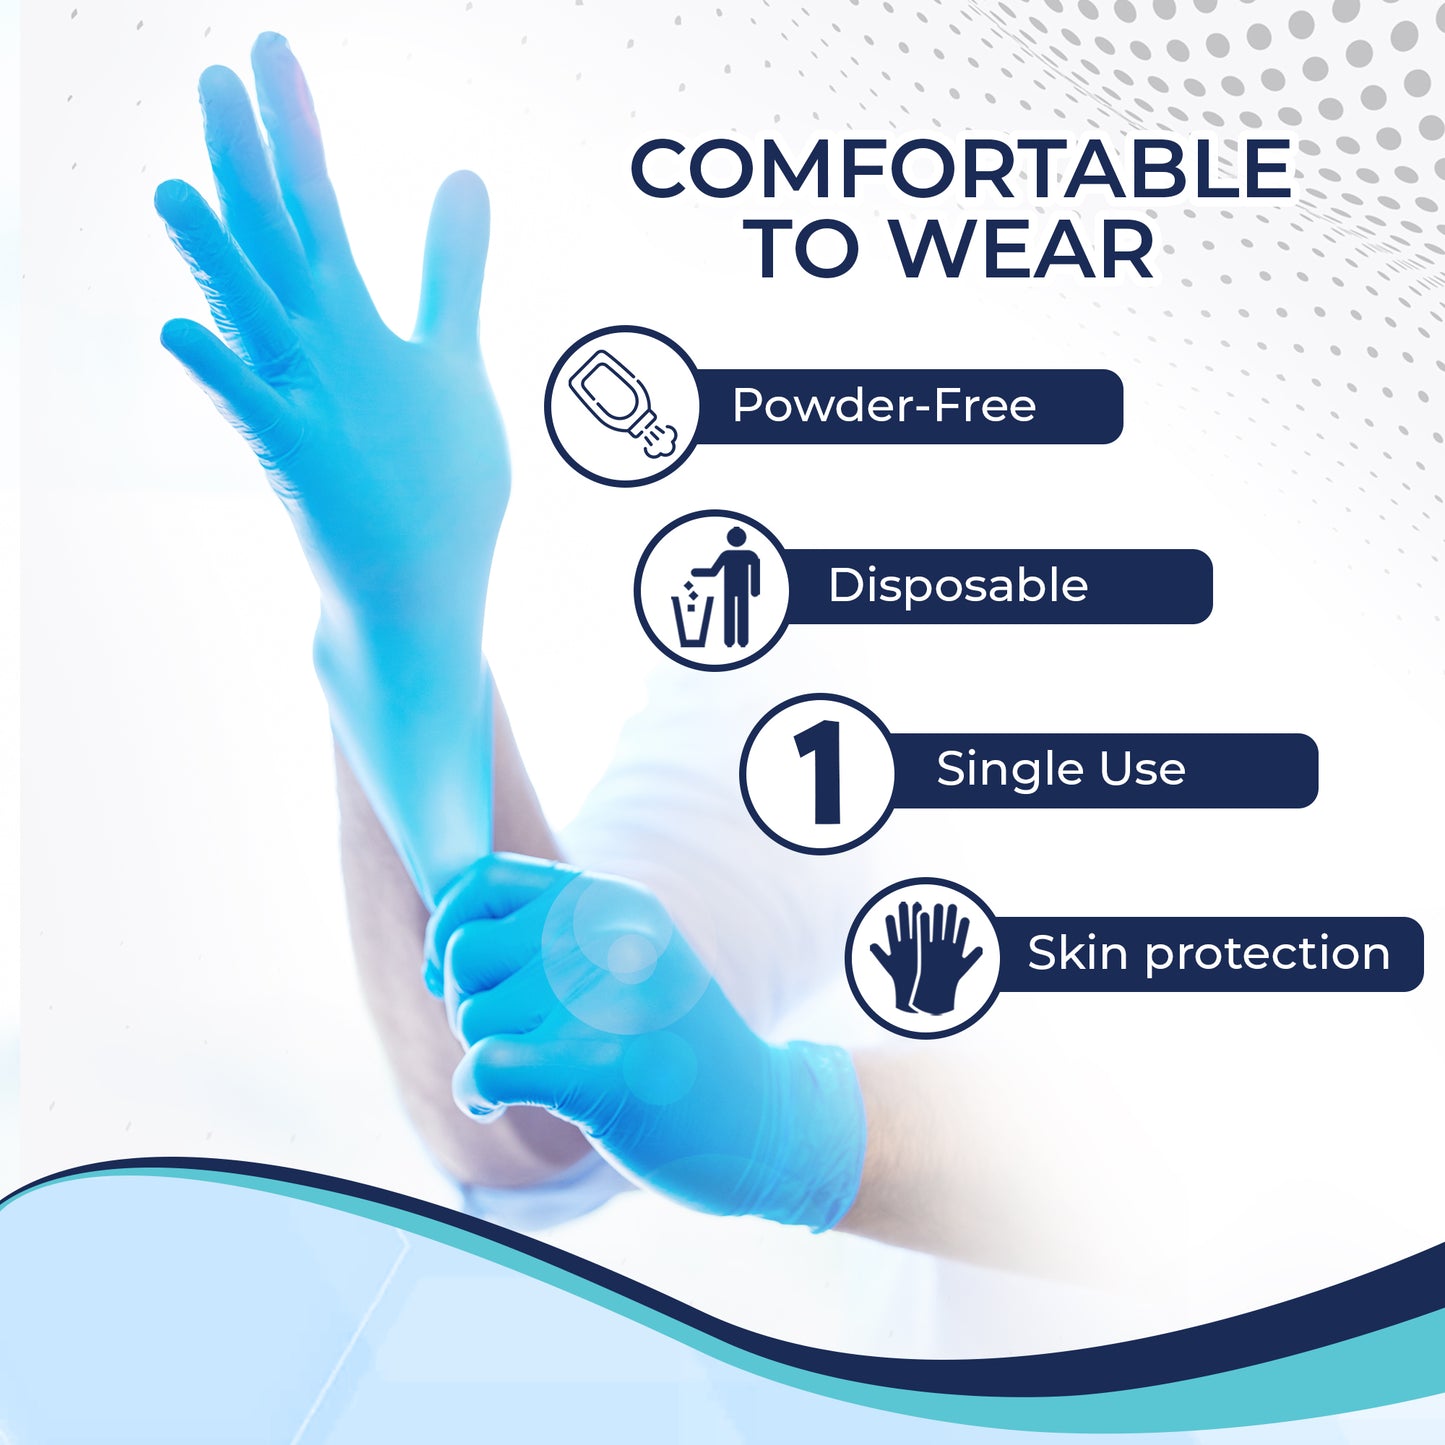 Chemotherapy Nitrile Exam Gloves - Blue